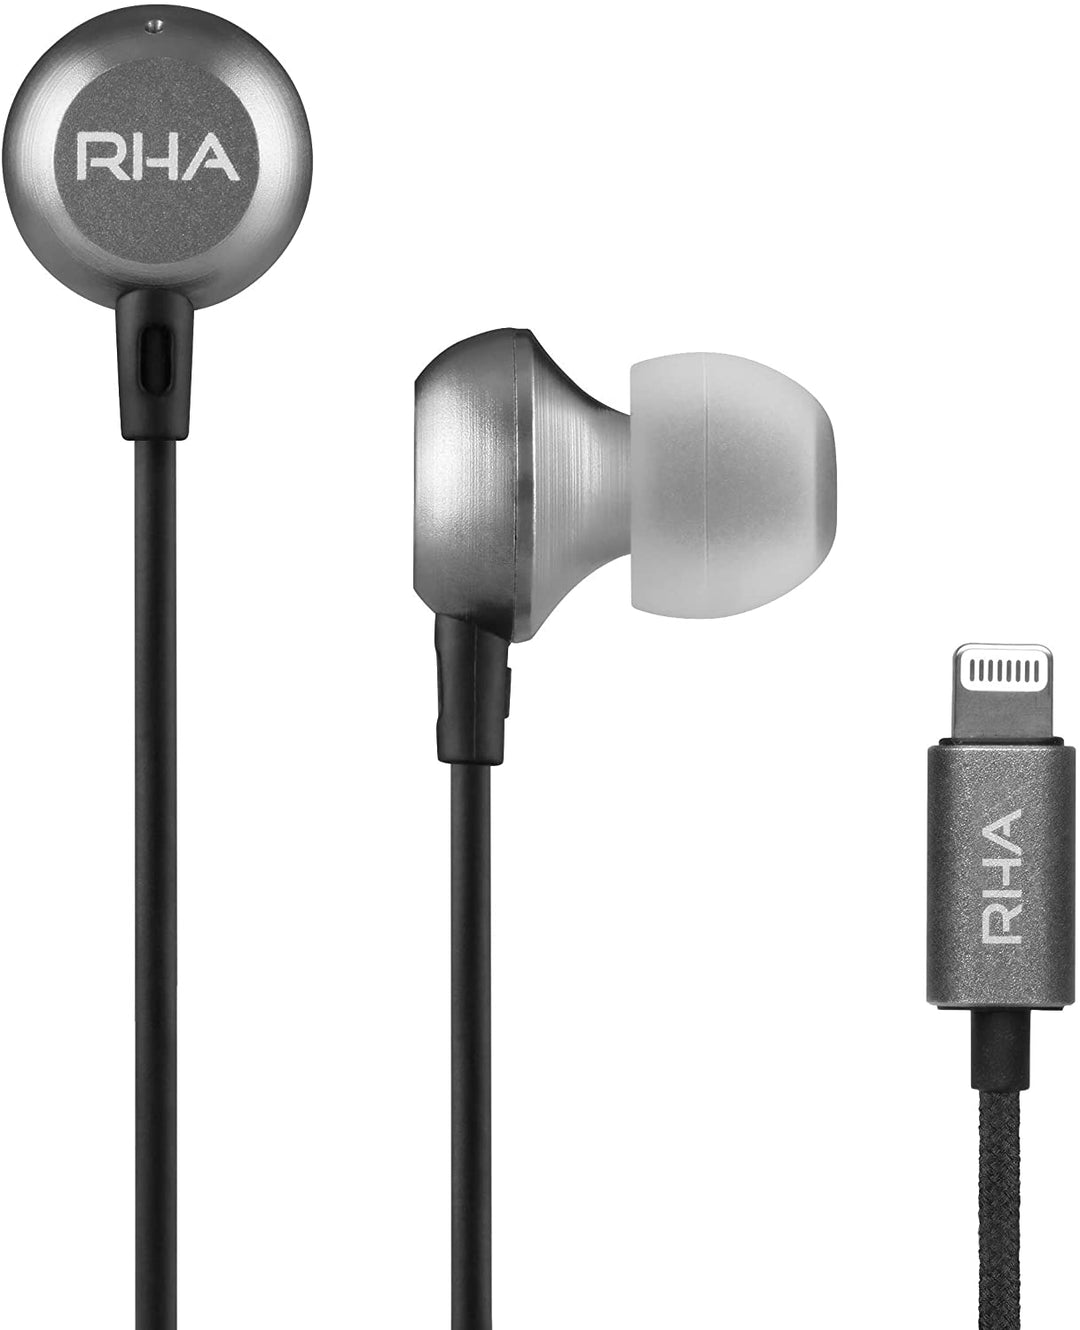 SO RHA | Lightning Earbuds - In-Ear | MA650i